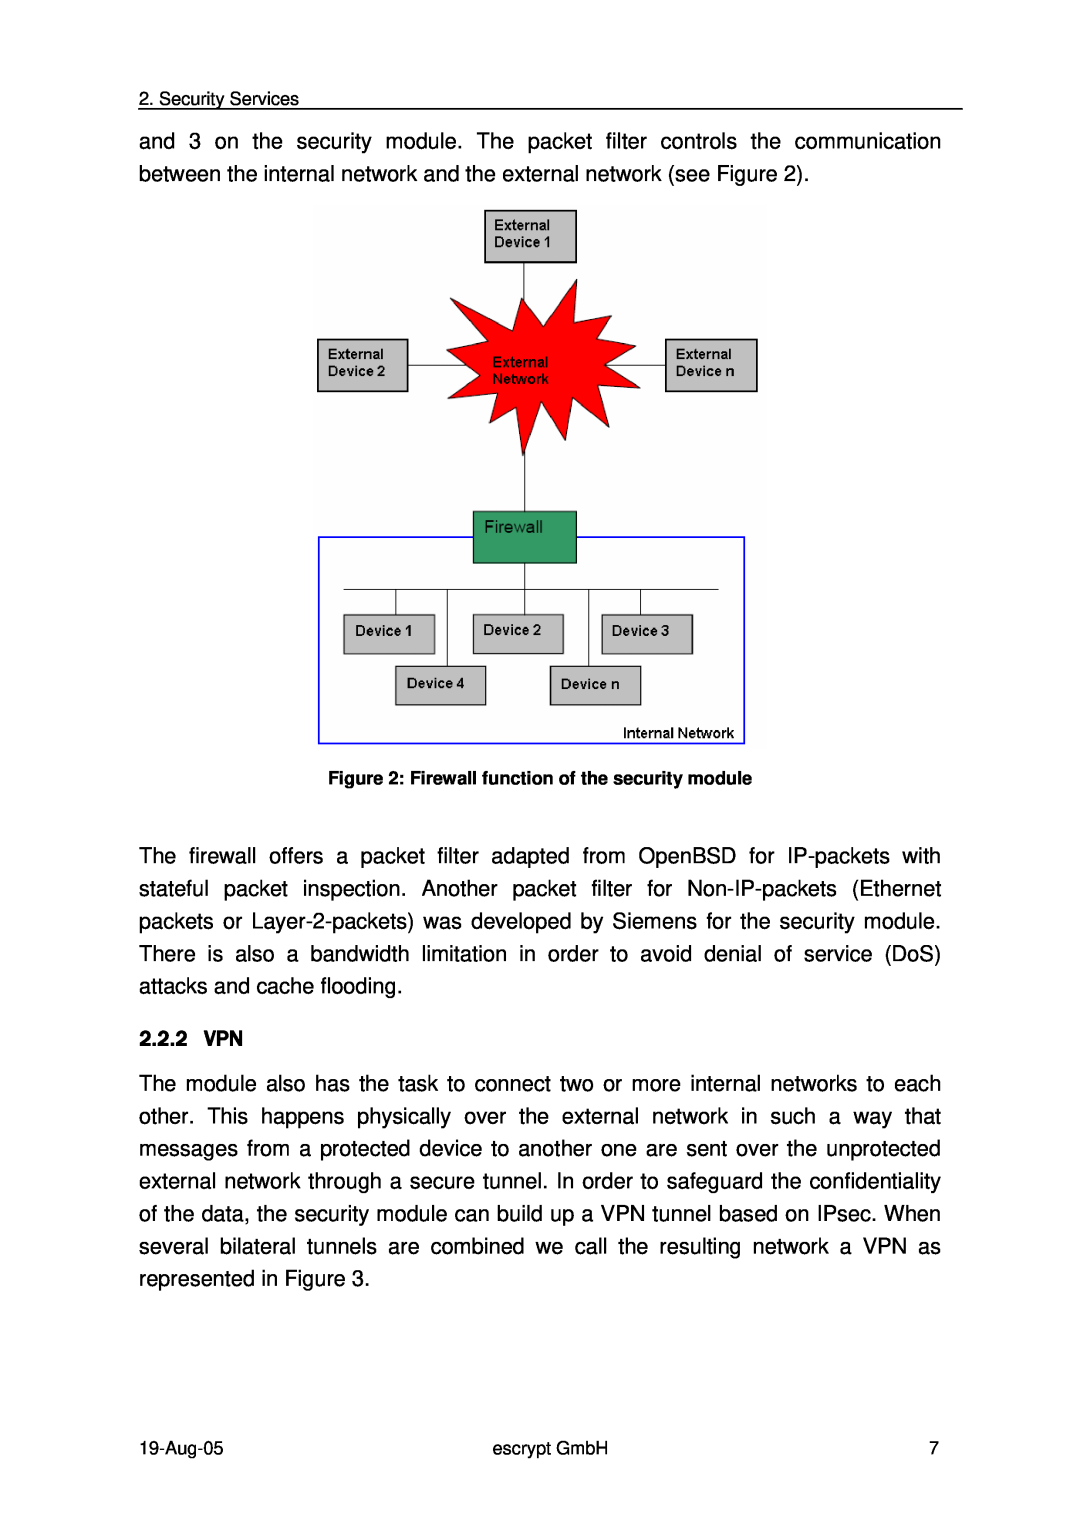 Siemens Version: 1.2 manual 2.2.2 VPN, Security Services, Aug-05, escrypt GmbH 